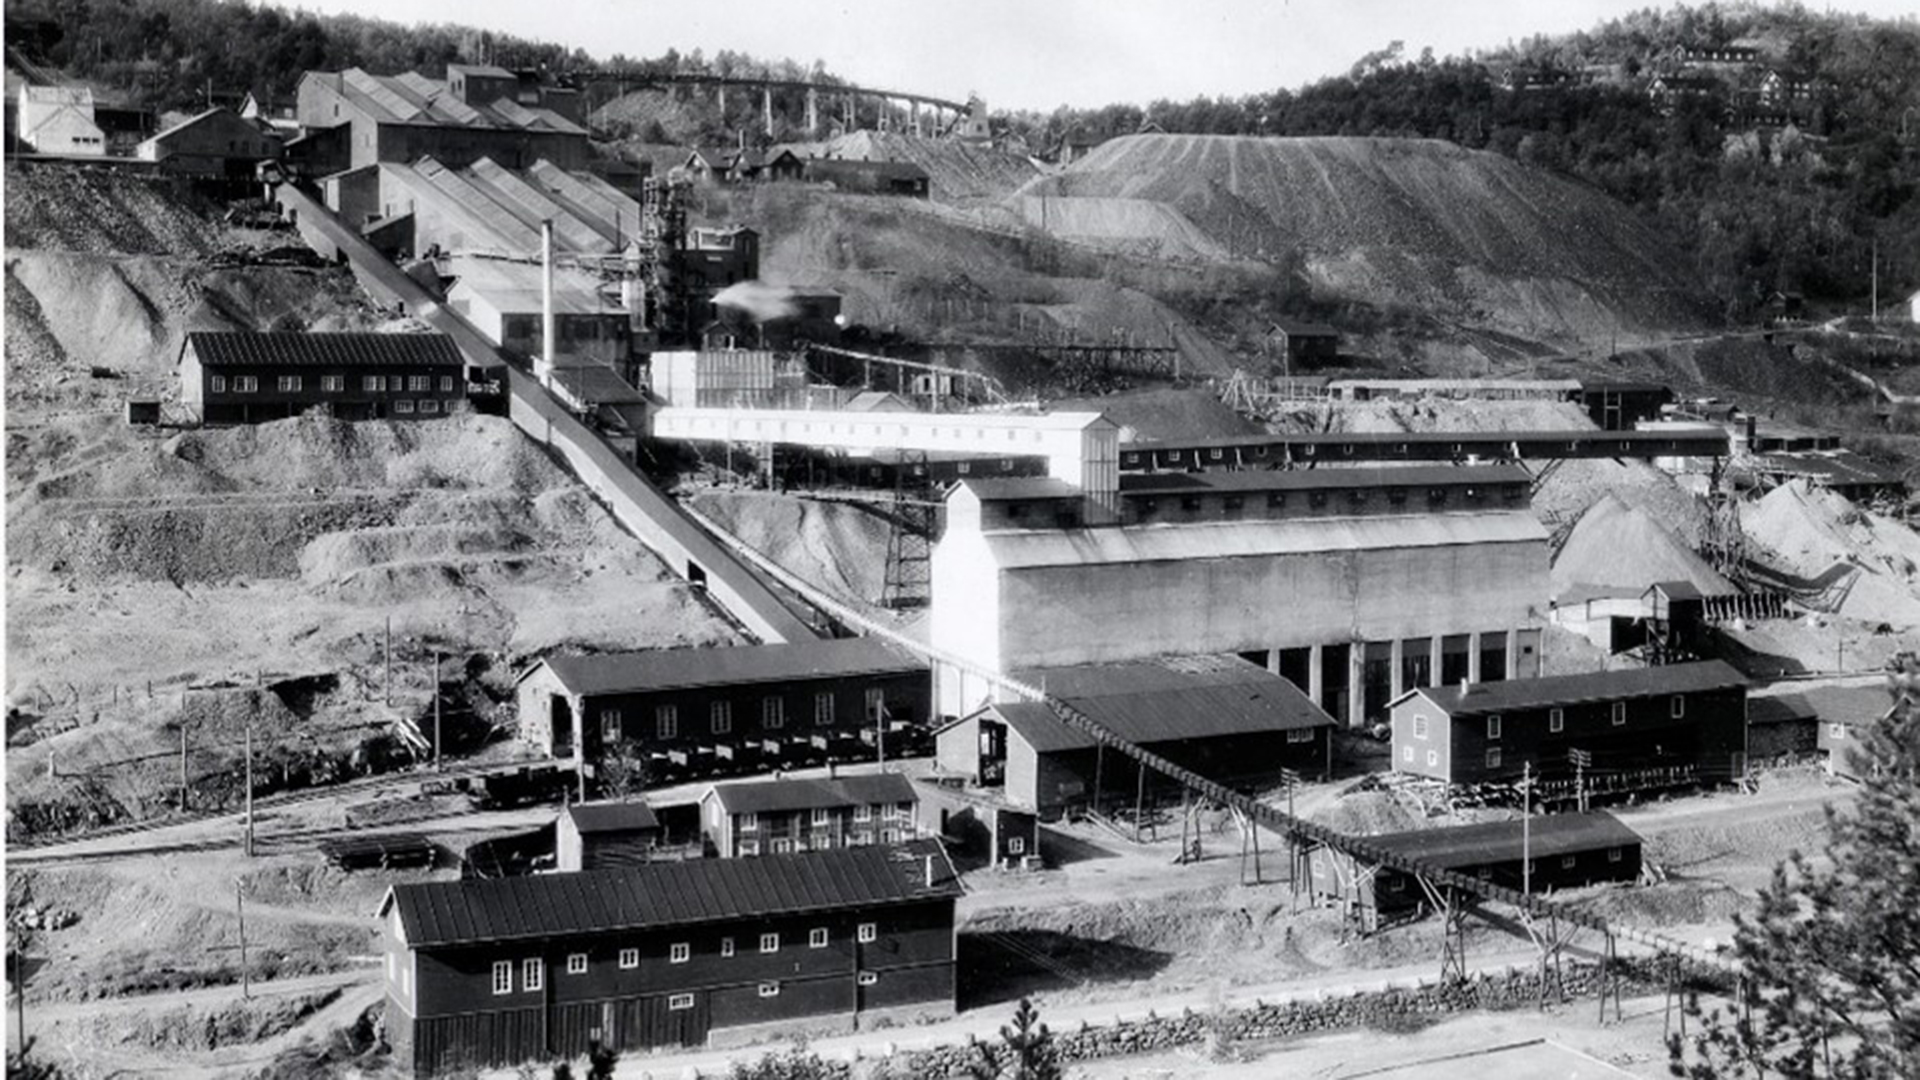 Mining in Norway